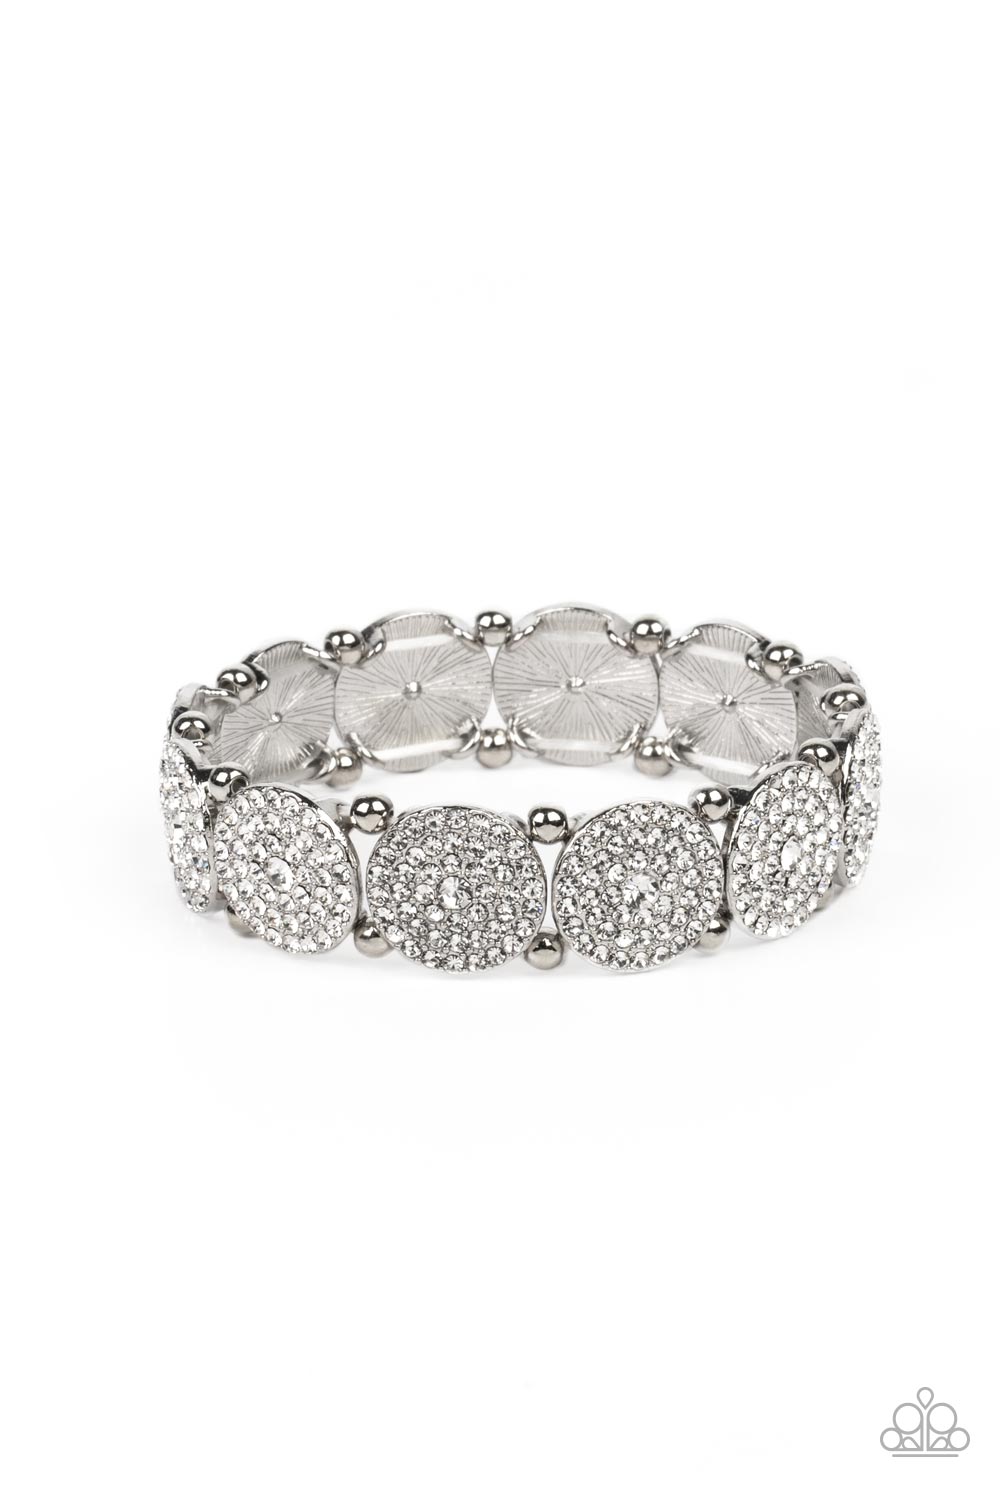 Palace Intrigue - White (Glassy Rhinestone) Bracelet